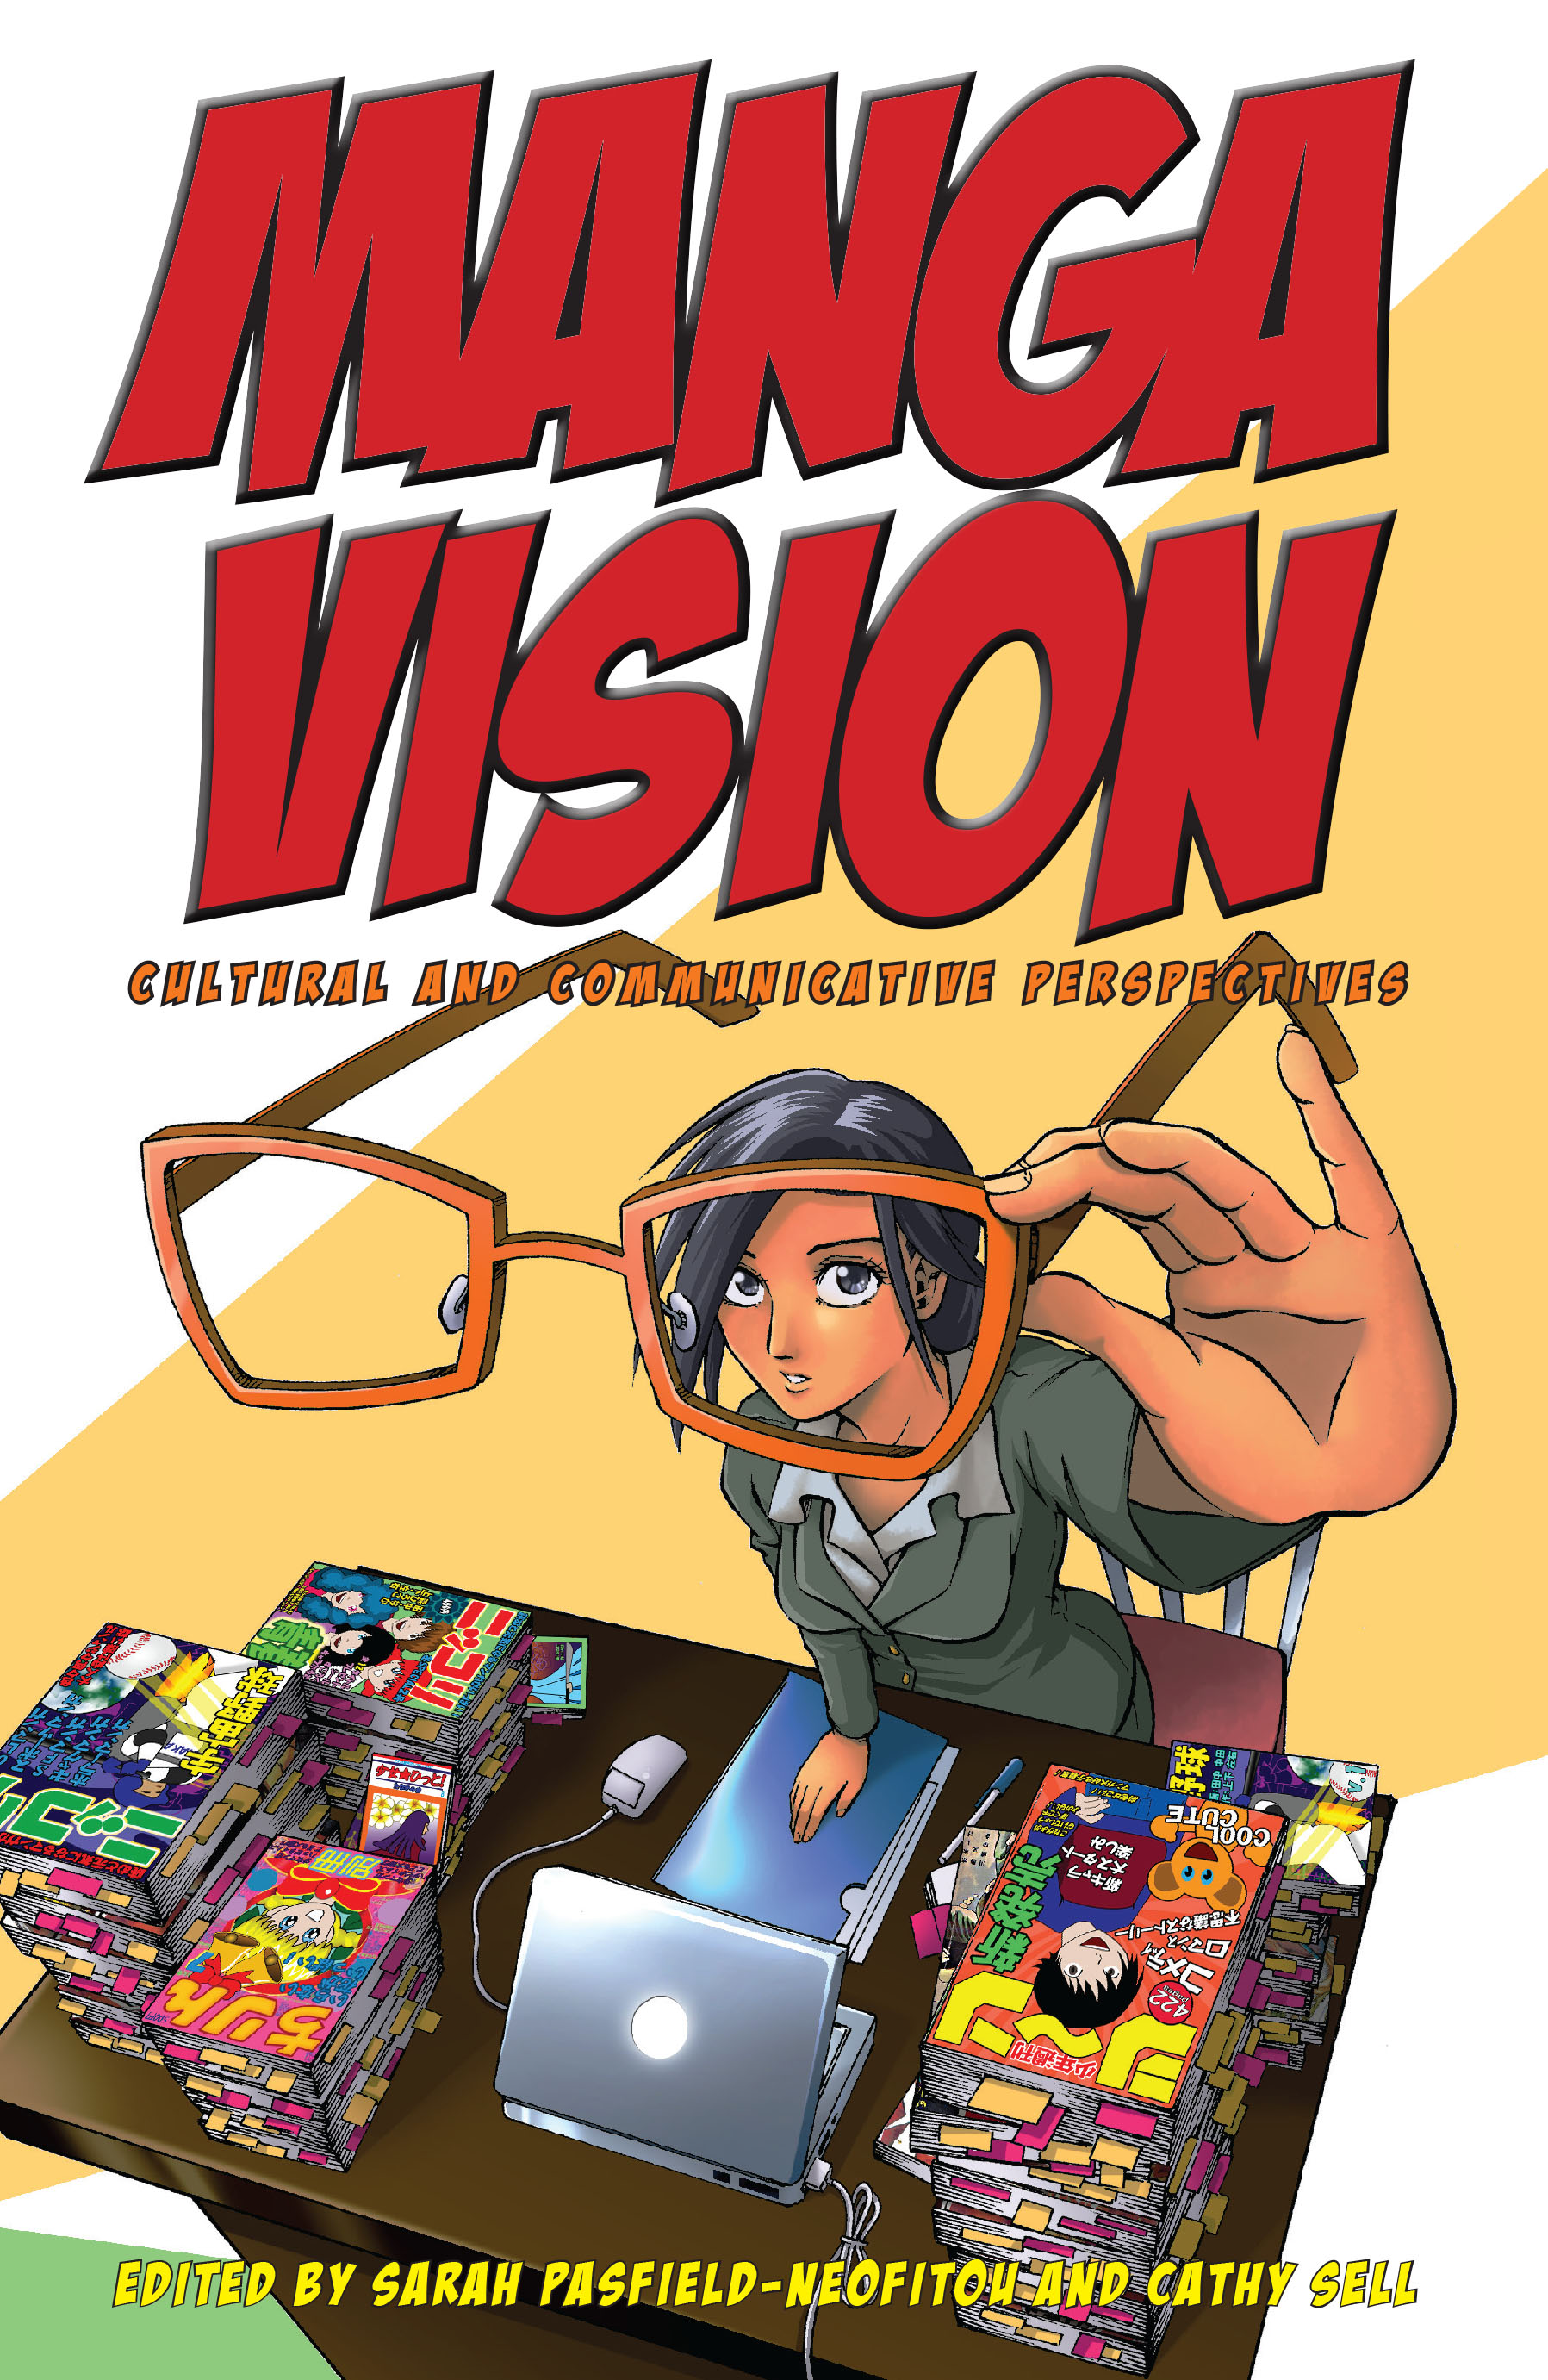 Manga Vision Newsouth Books